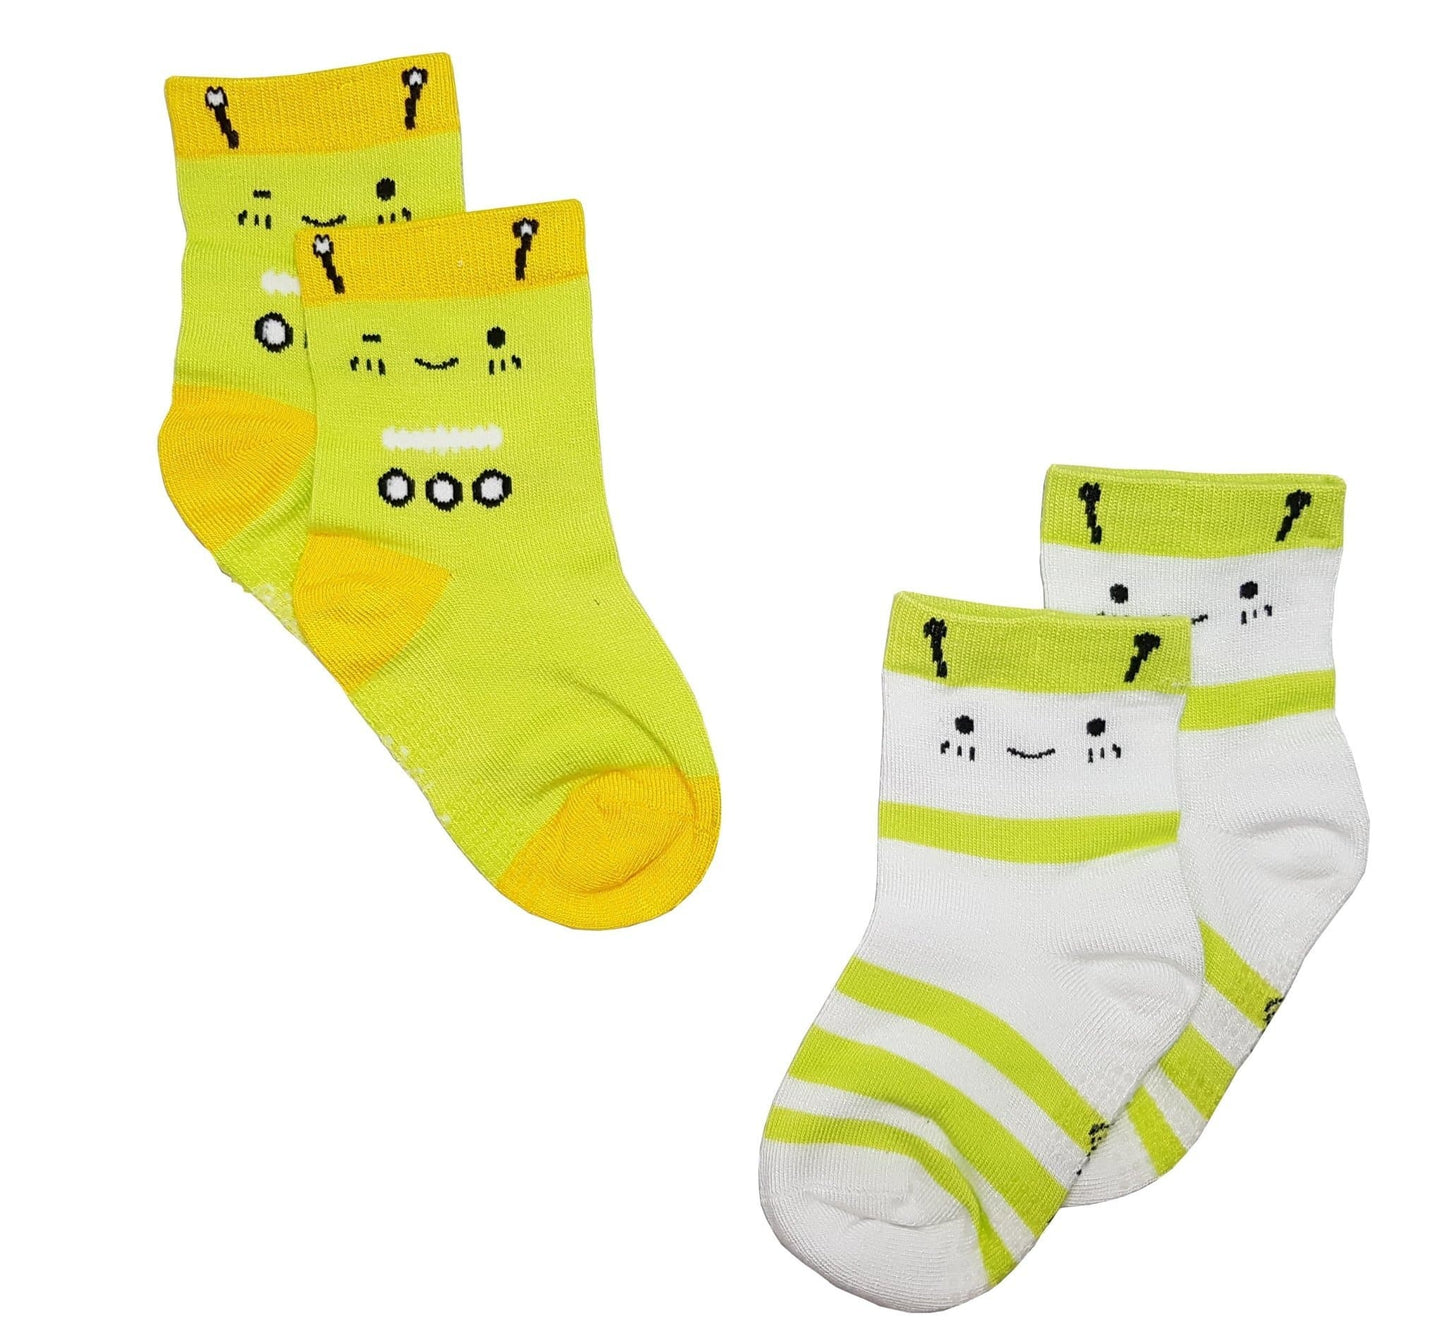 Robots (1-pair Lime Green / 1-pair White) - Anti-slip Bamboo Socks (2 Pairs) by simplylifebaby